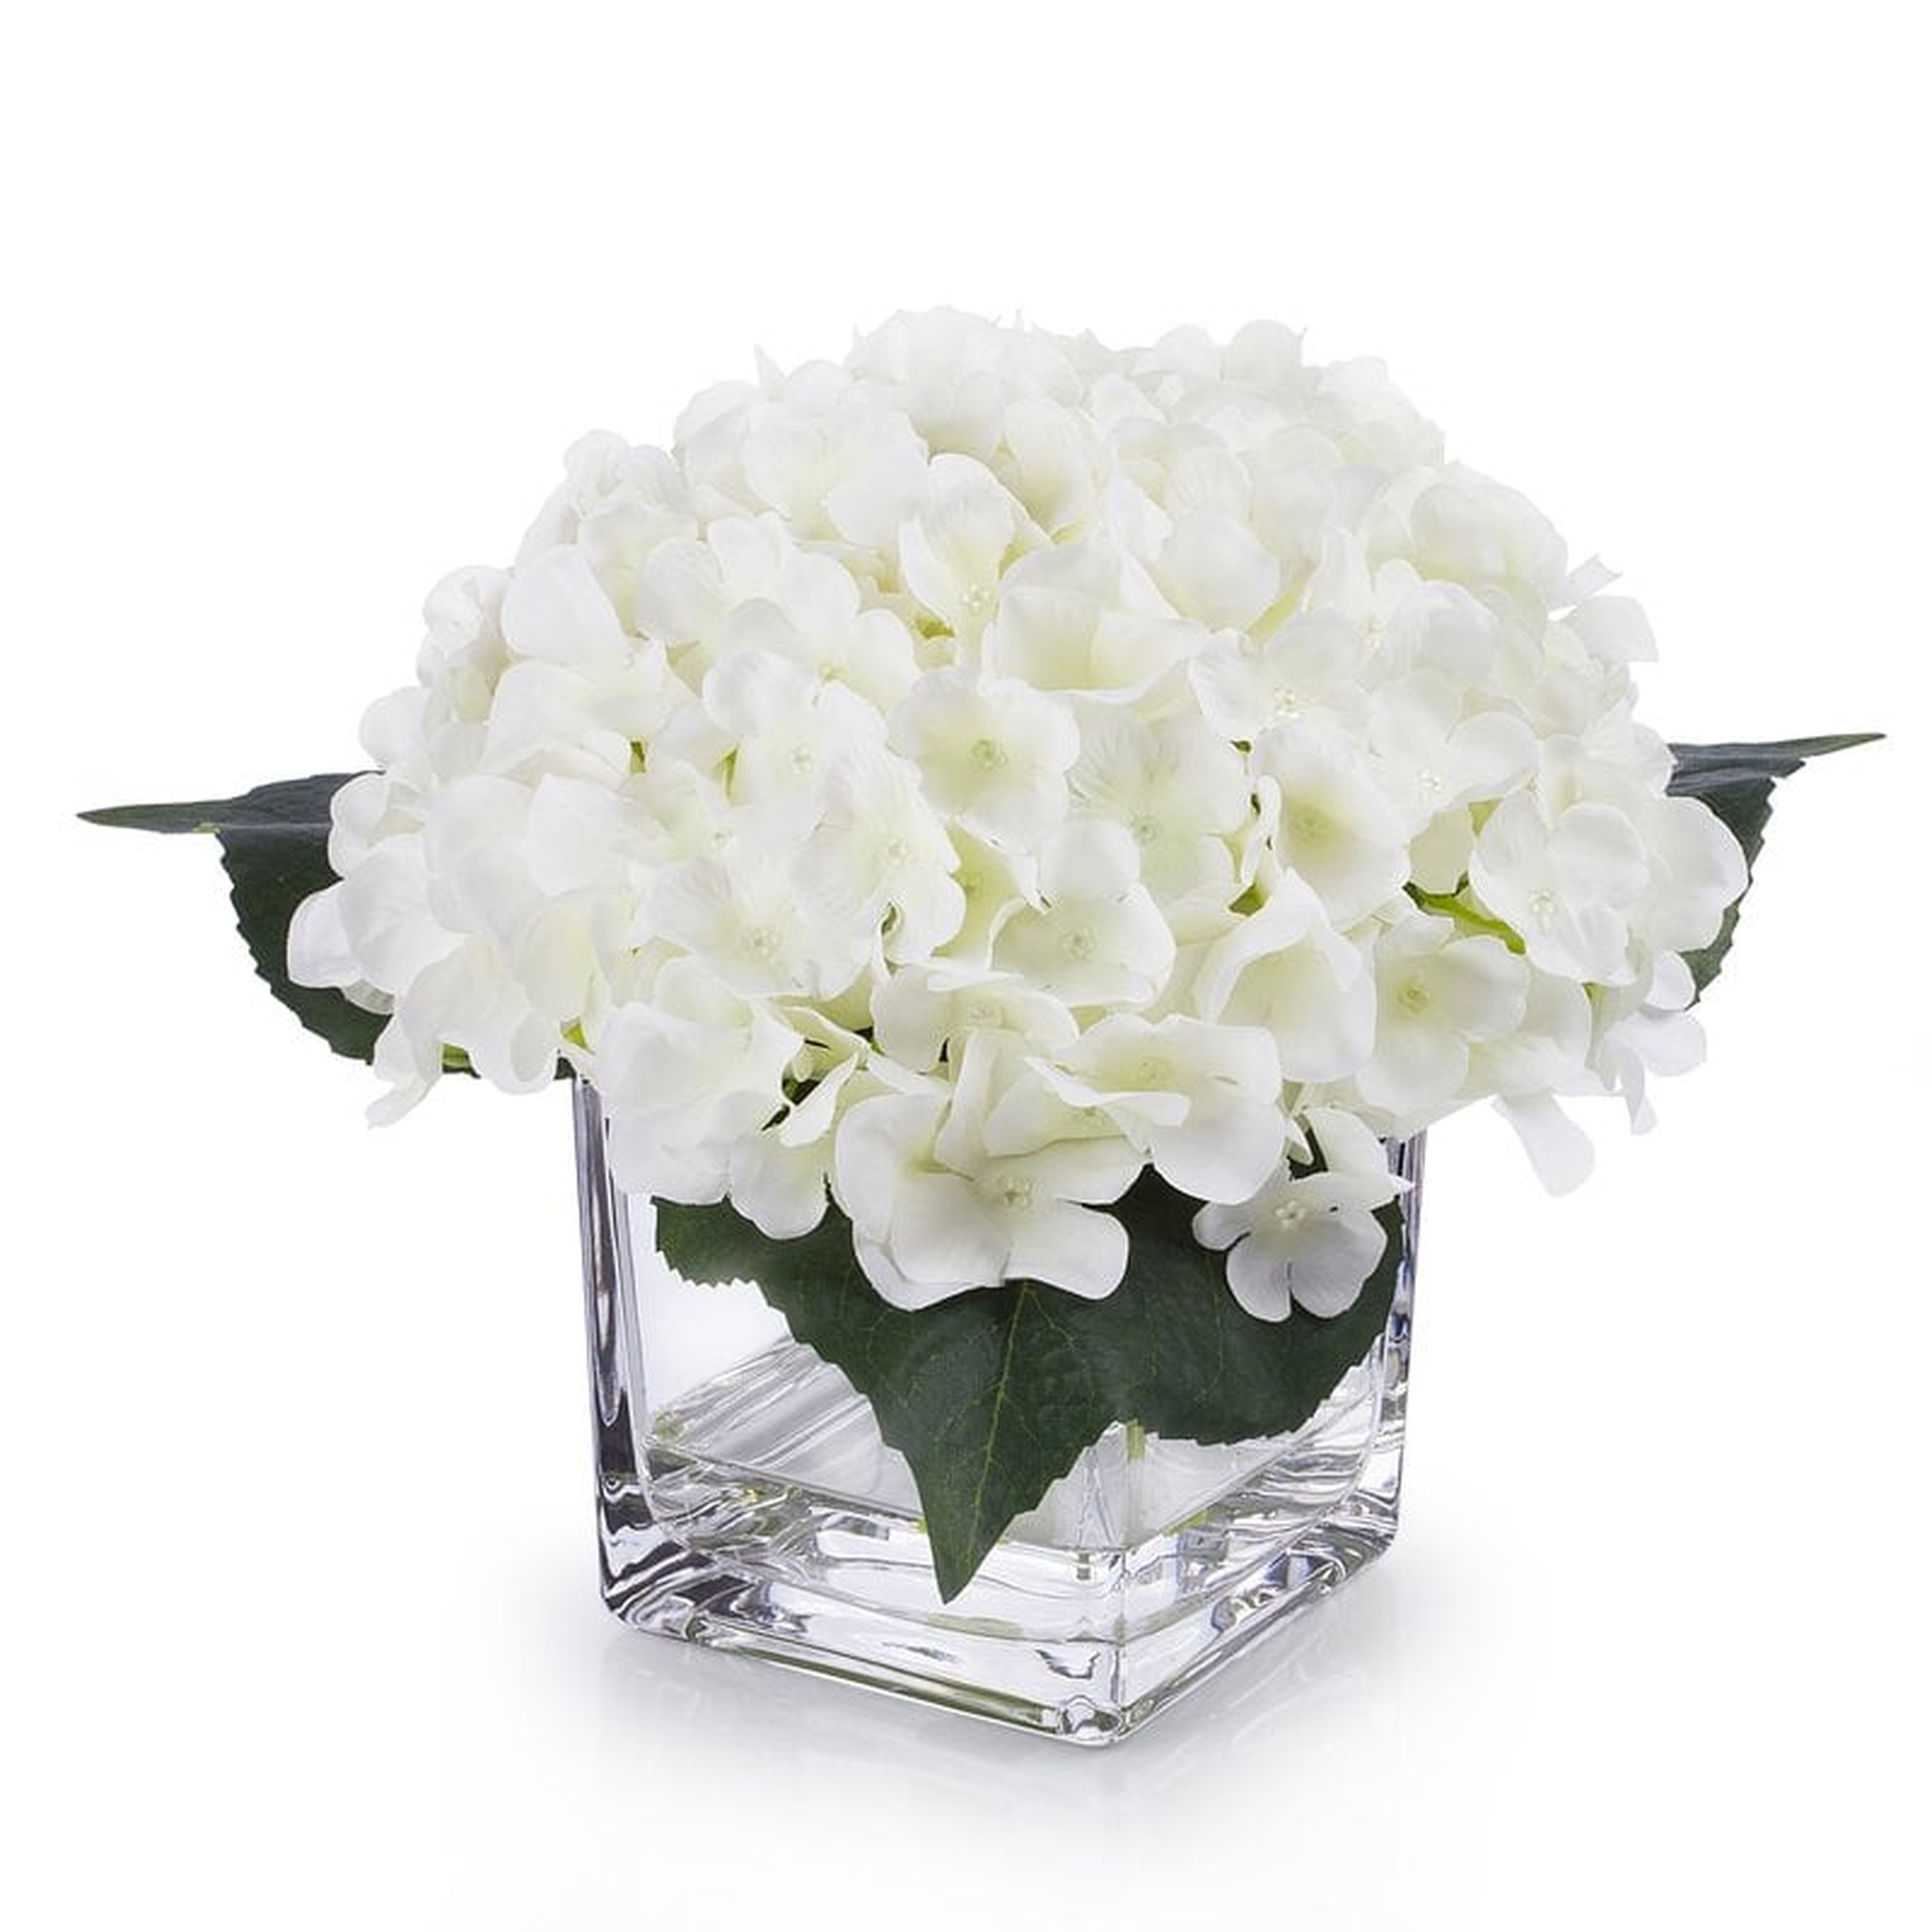 Hydrangea Floral Arrangements and Centerpieces in Vase - Wayfair